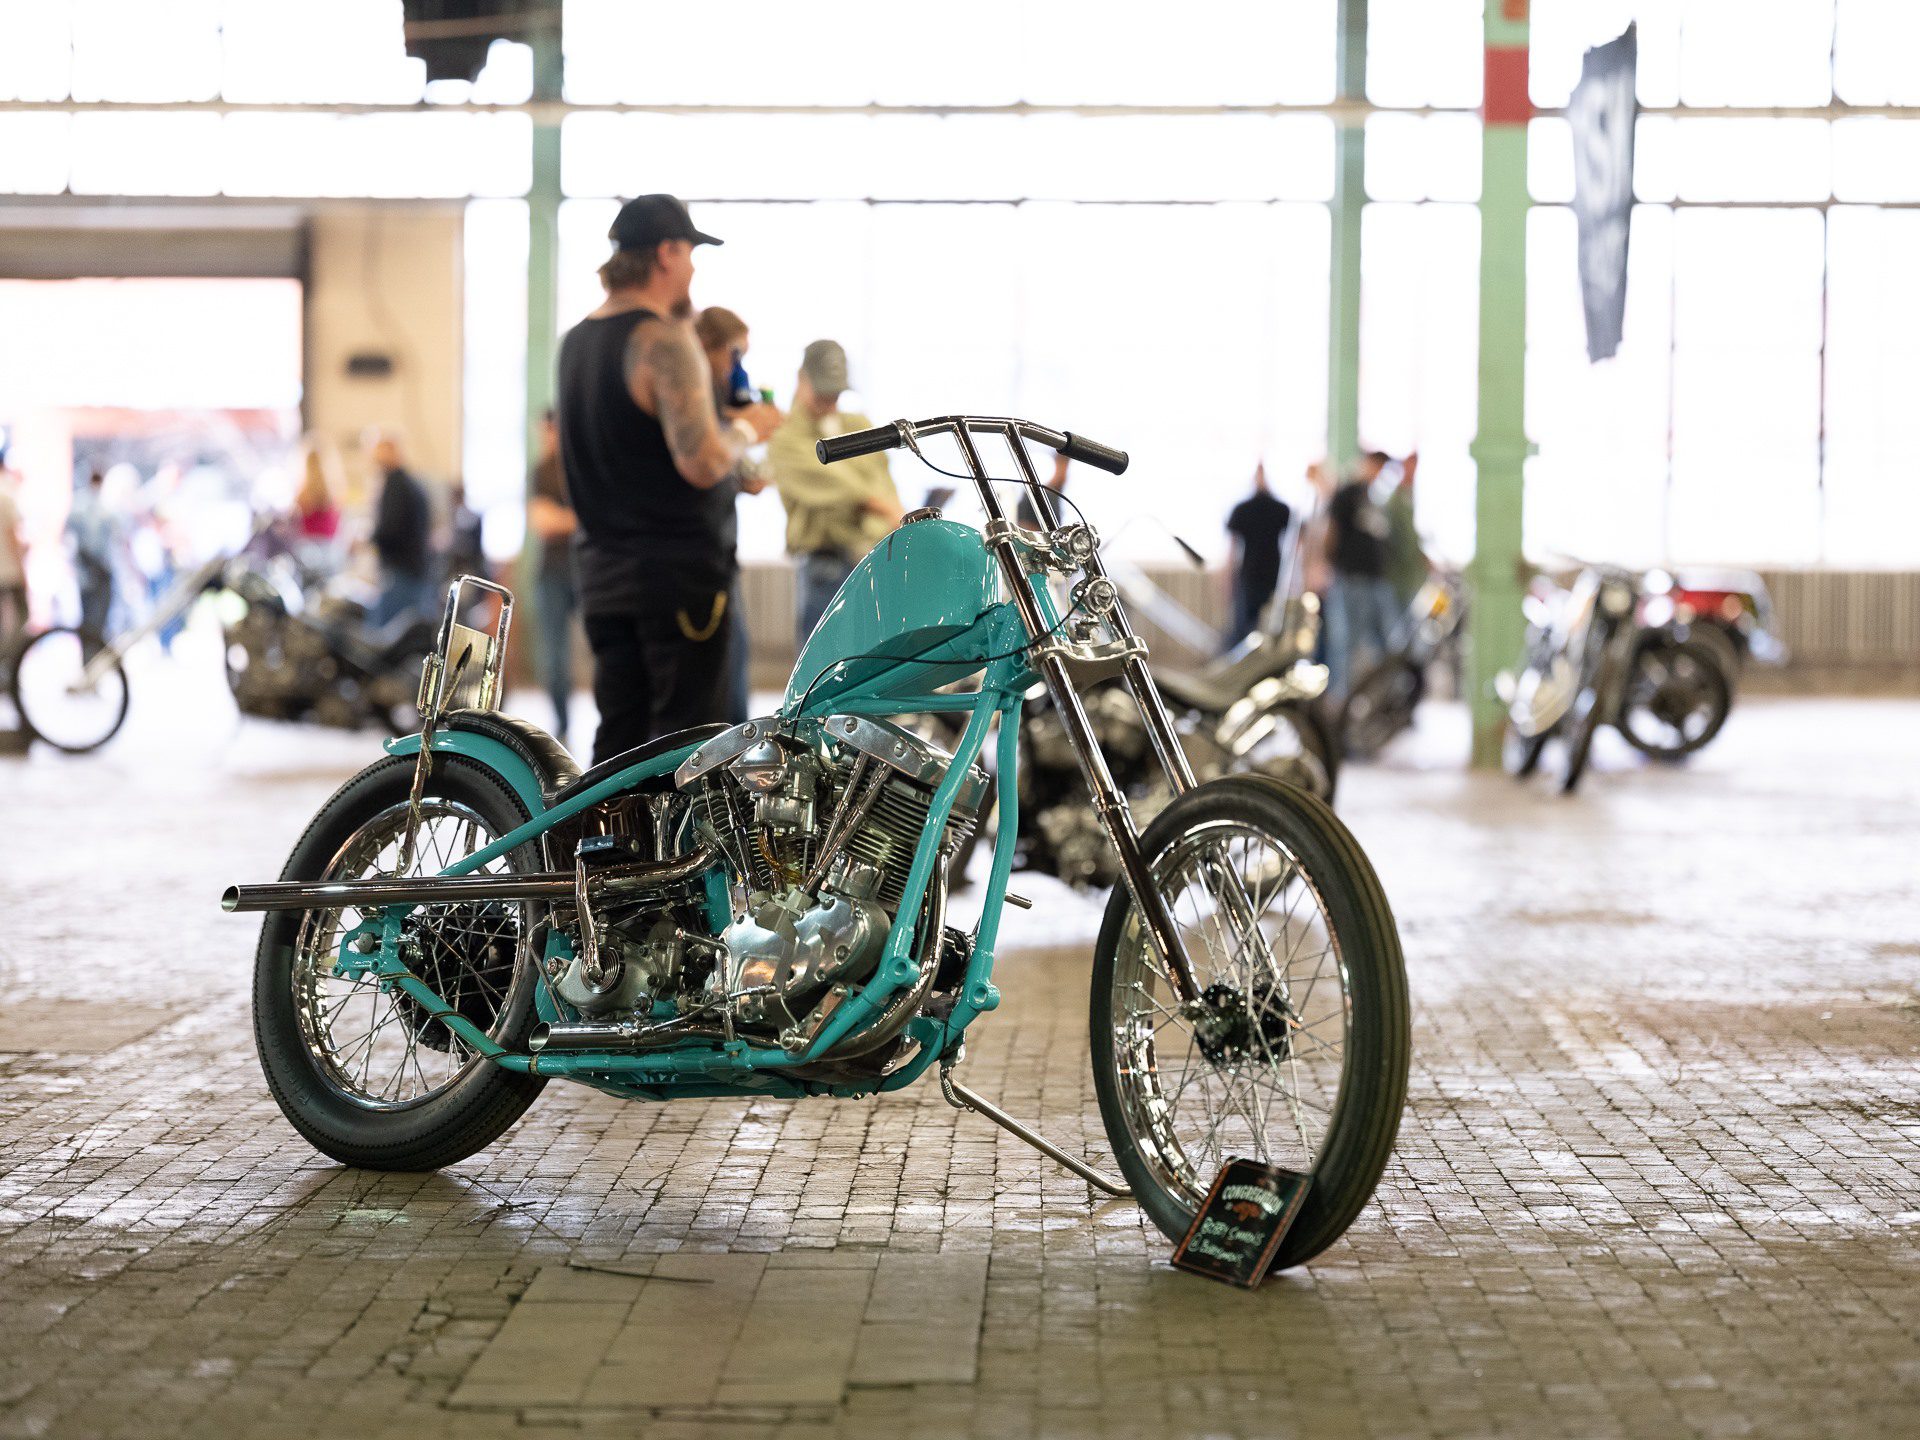 Awesome Harley Davidson Build